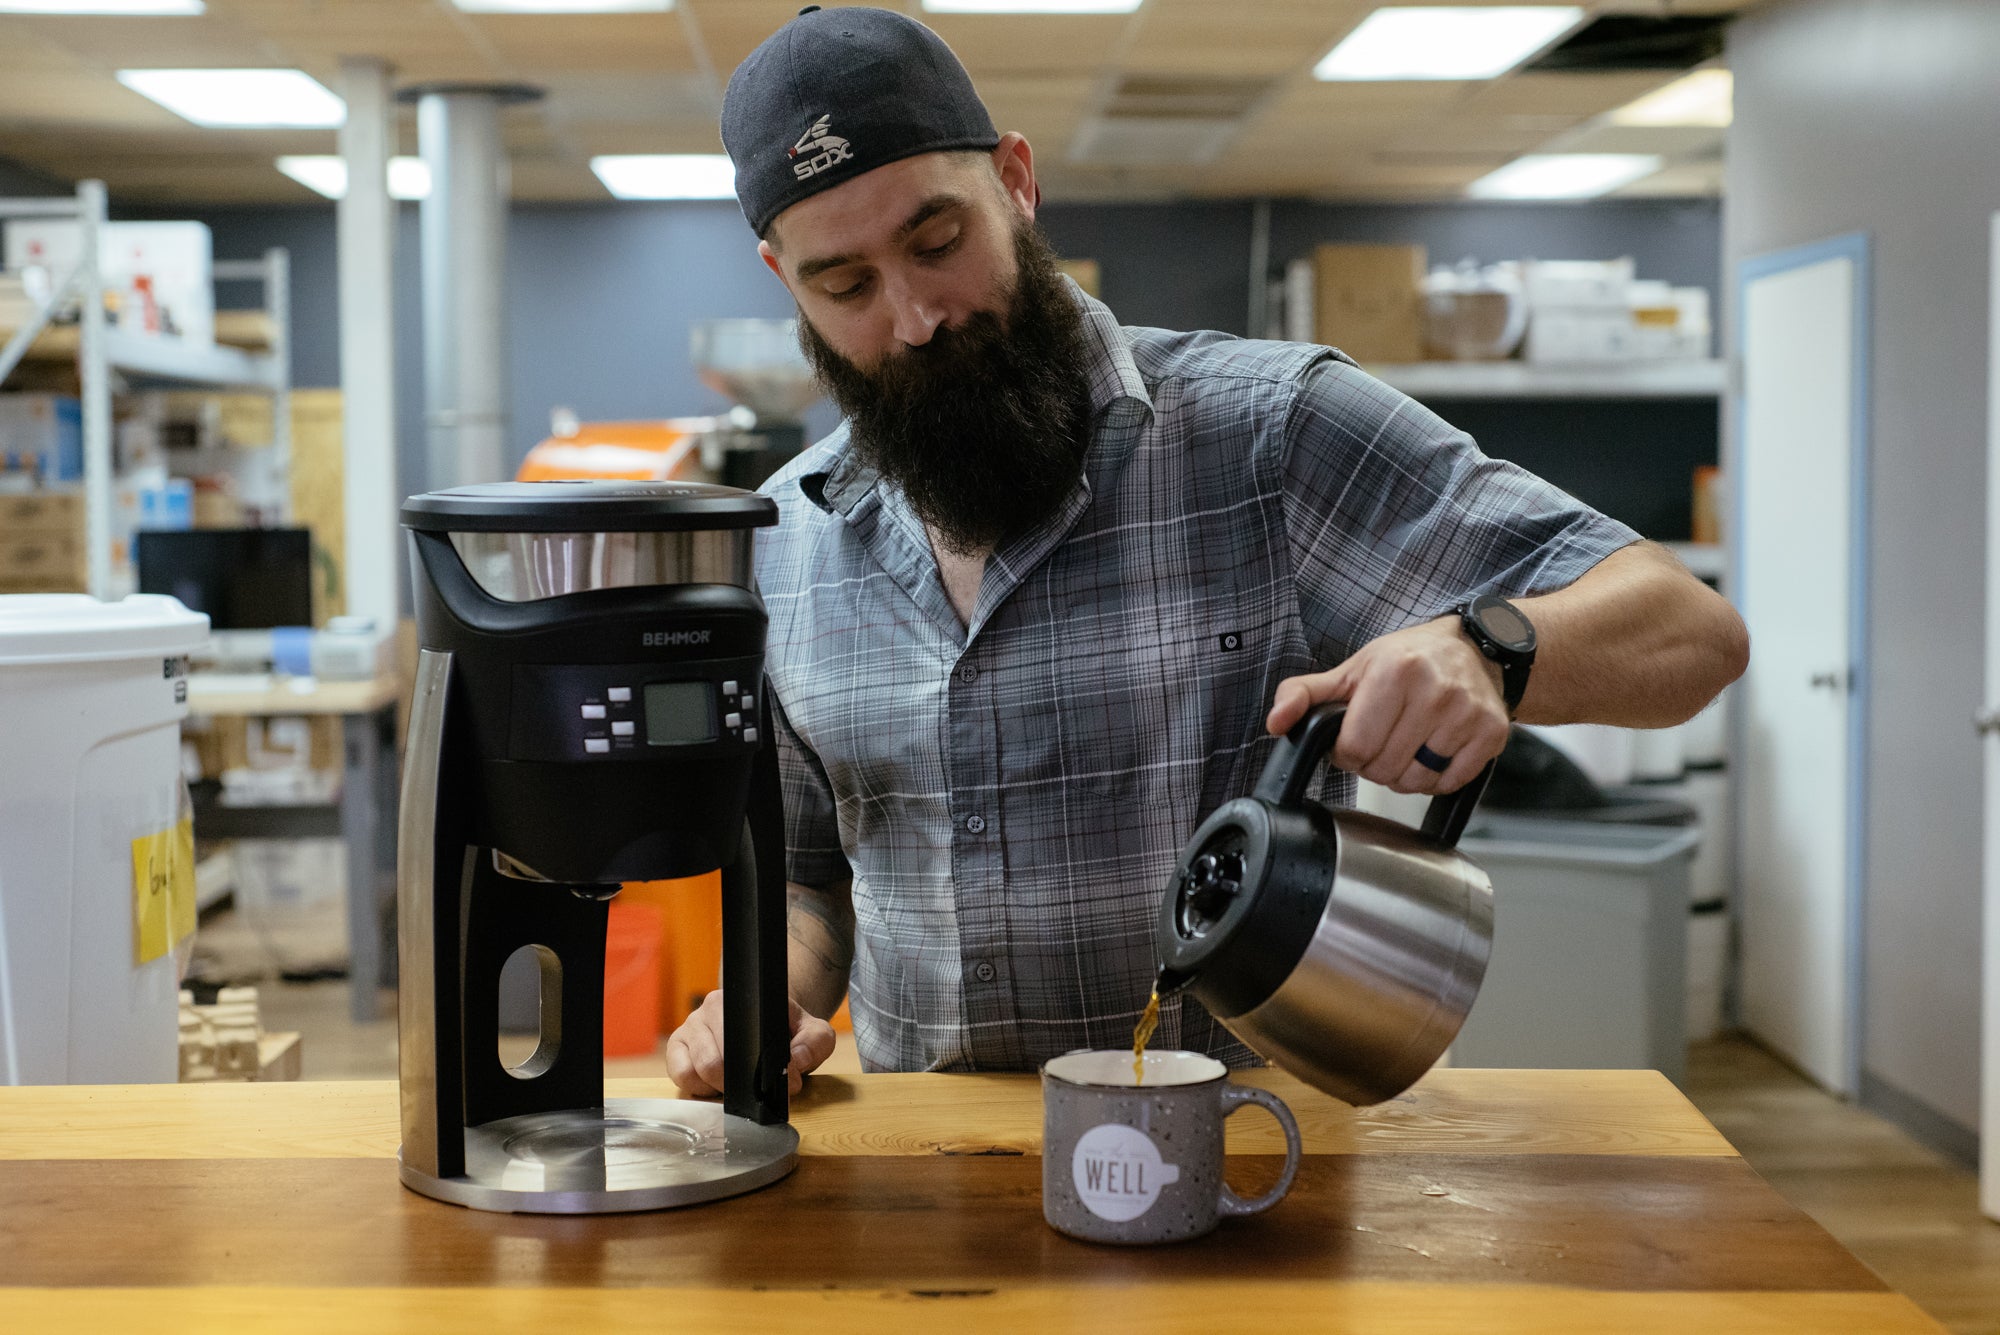 Pouring Final Product into Coffee Mug